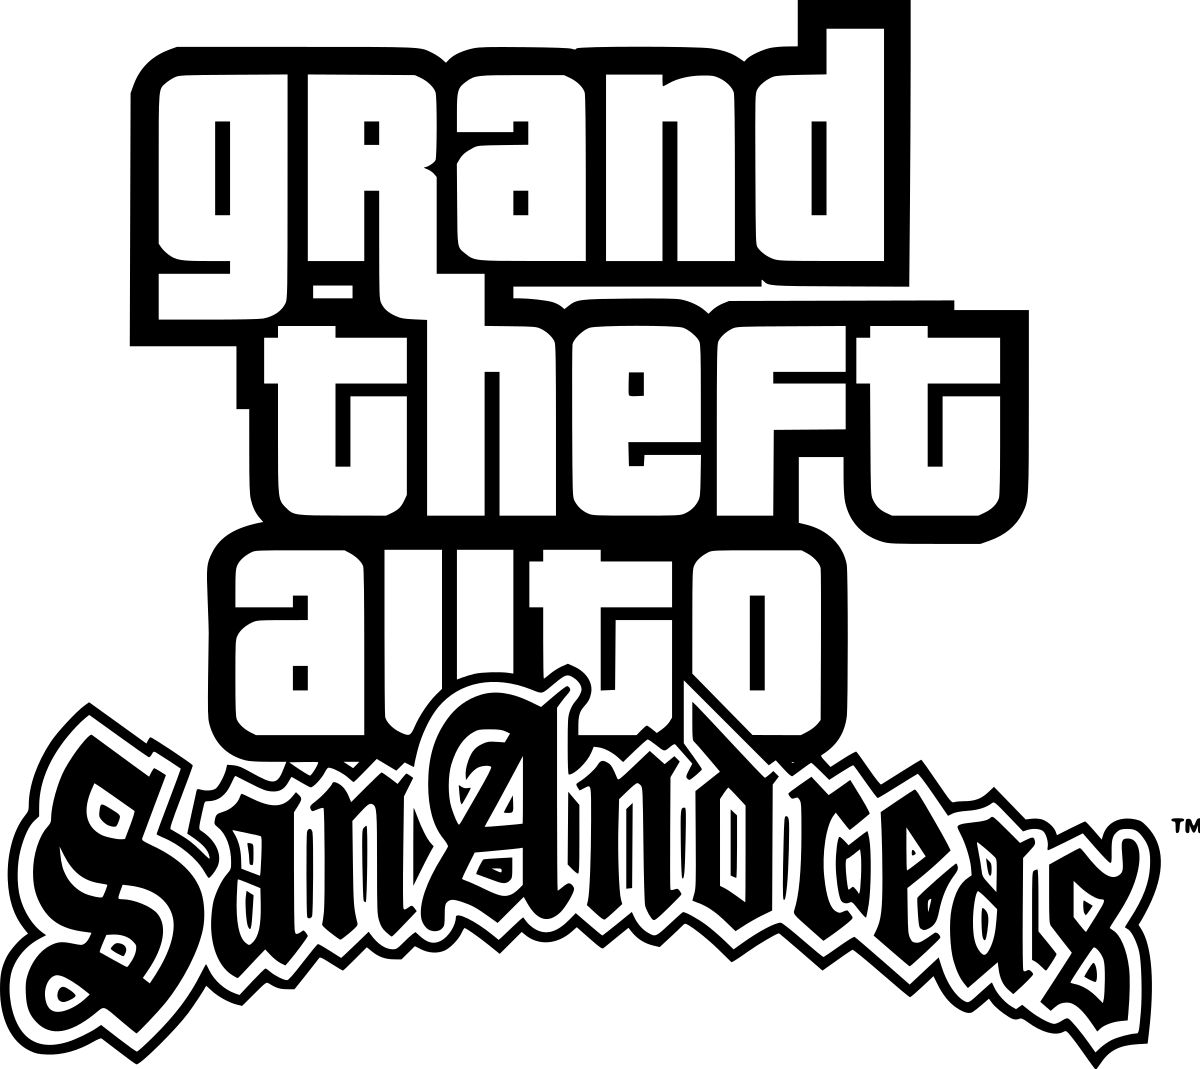 GTA #San #Andreas #Download #free #Full #Latest #Version